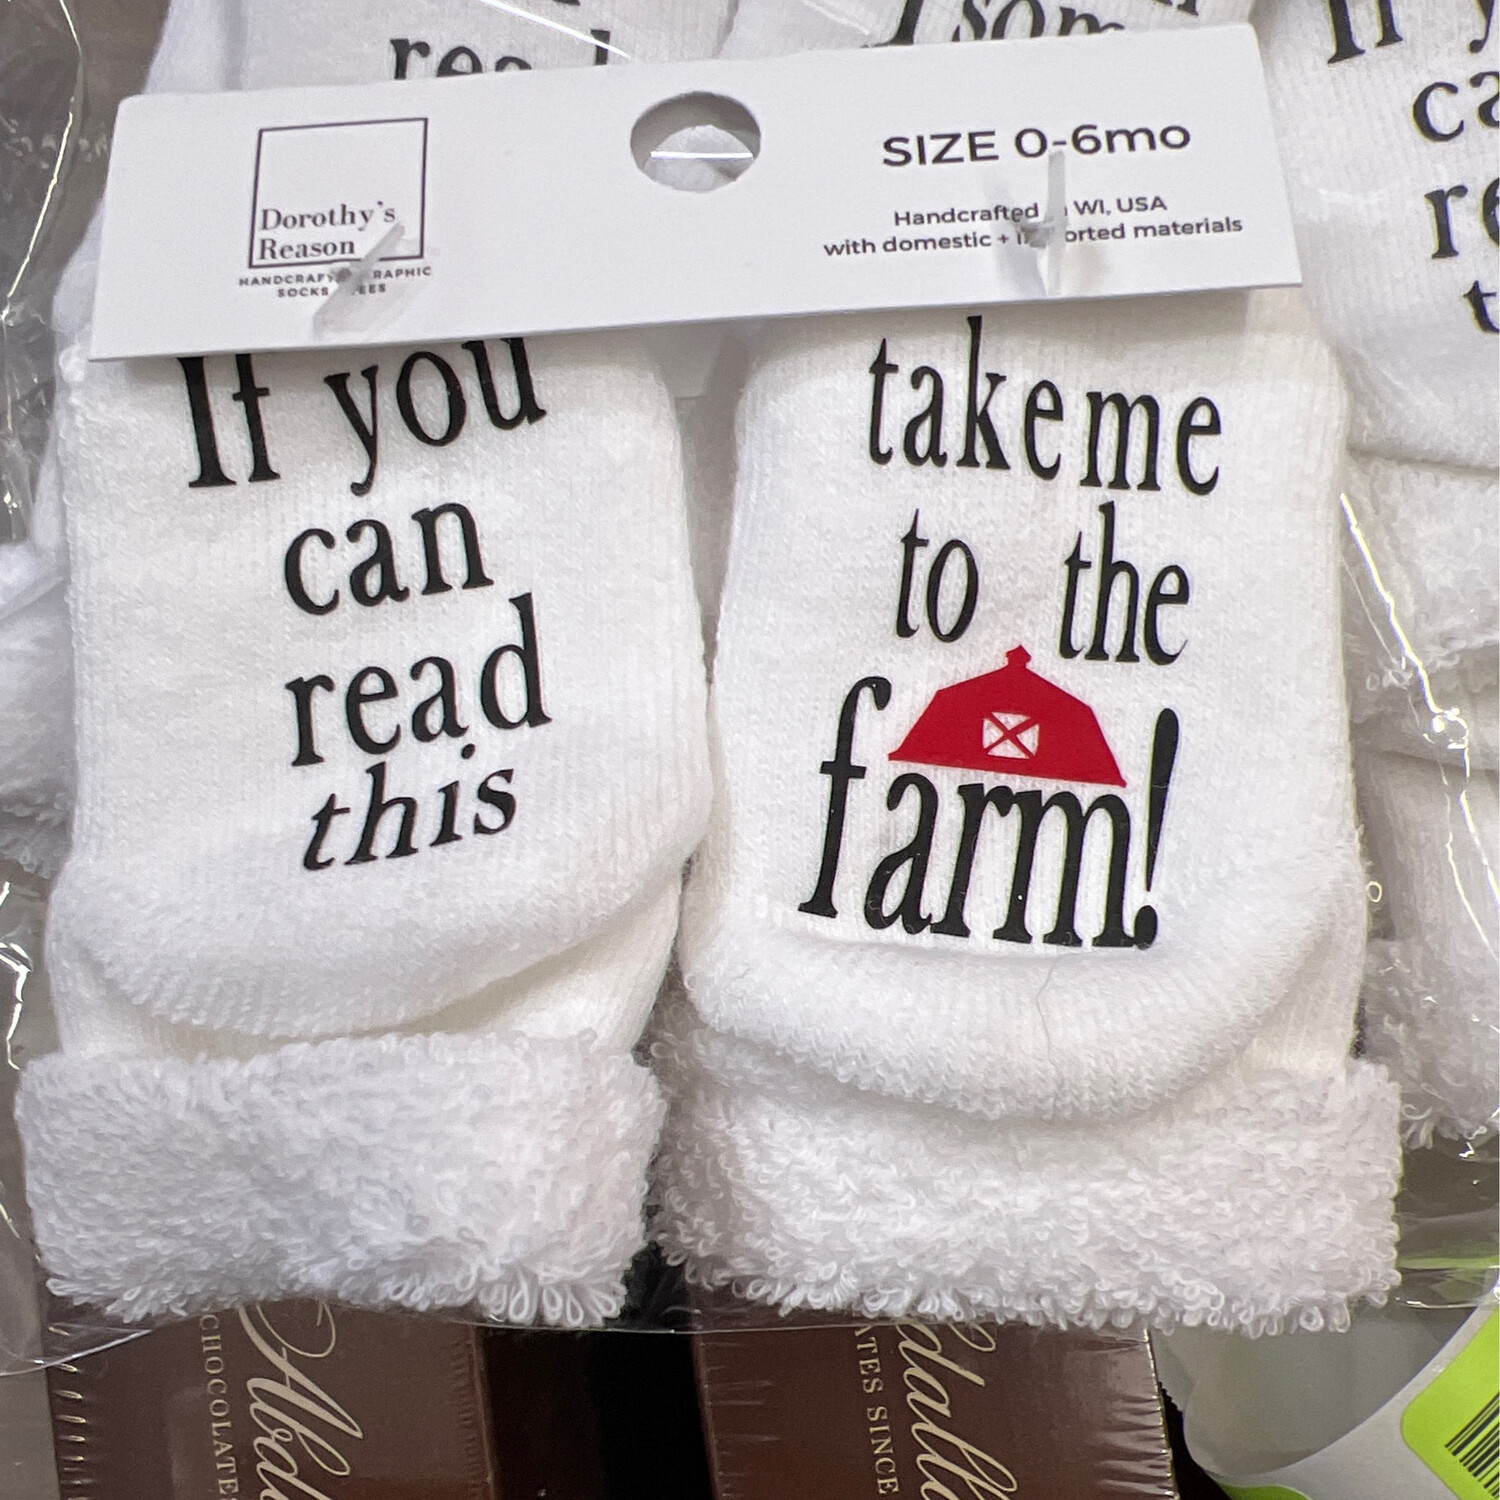 Take Me To The Farm Socks